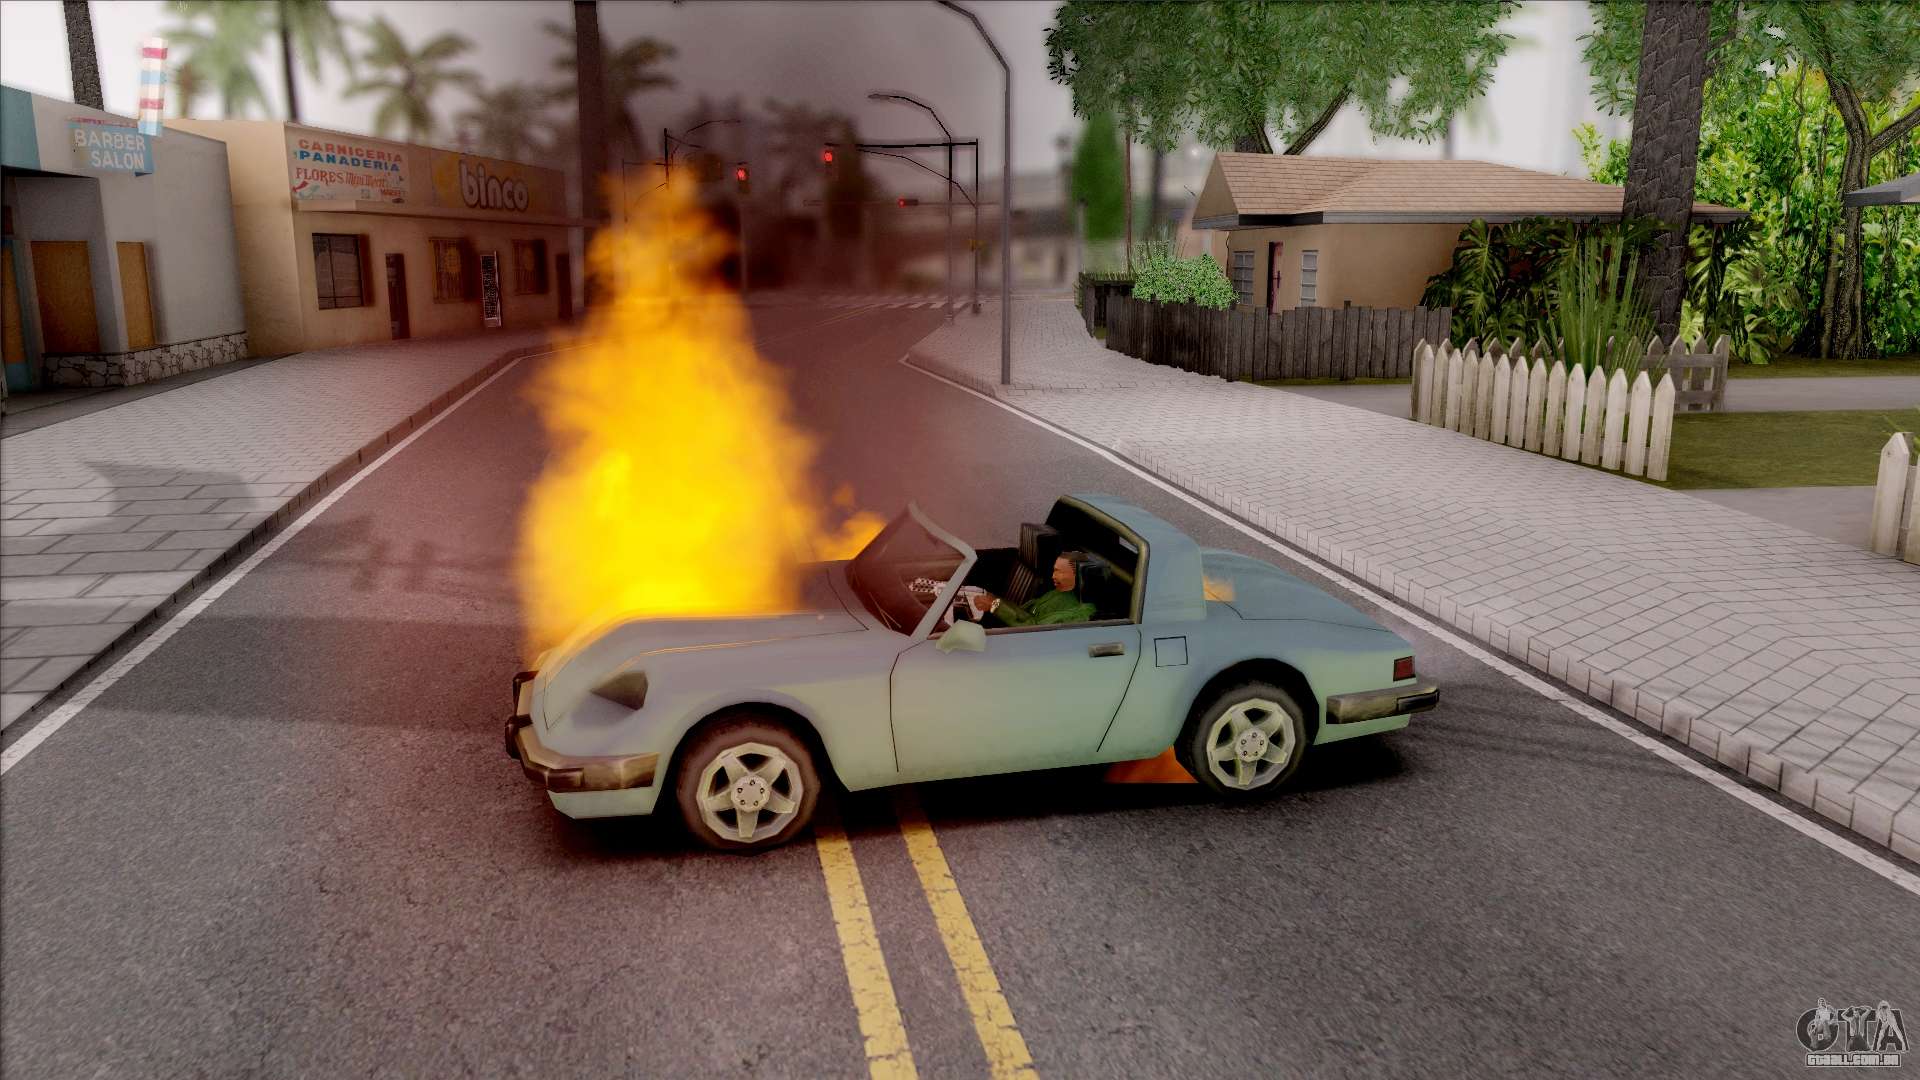 Not Die When Vehicle Explodes para GTA San Andreas